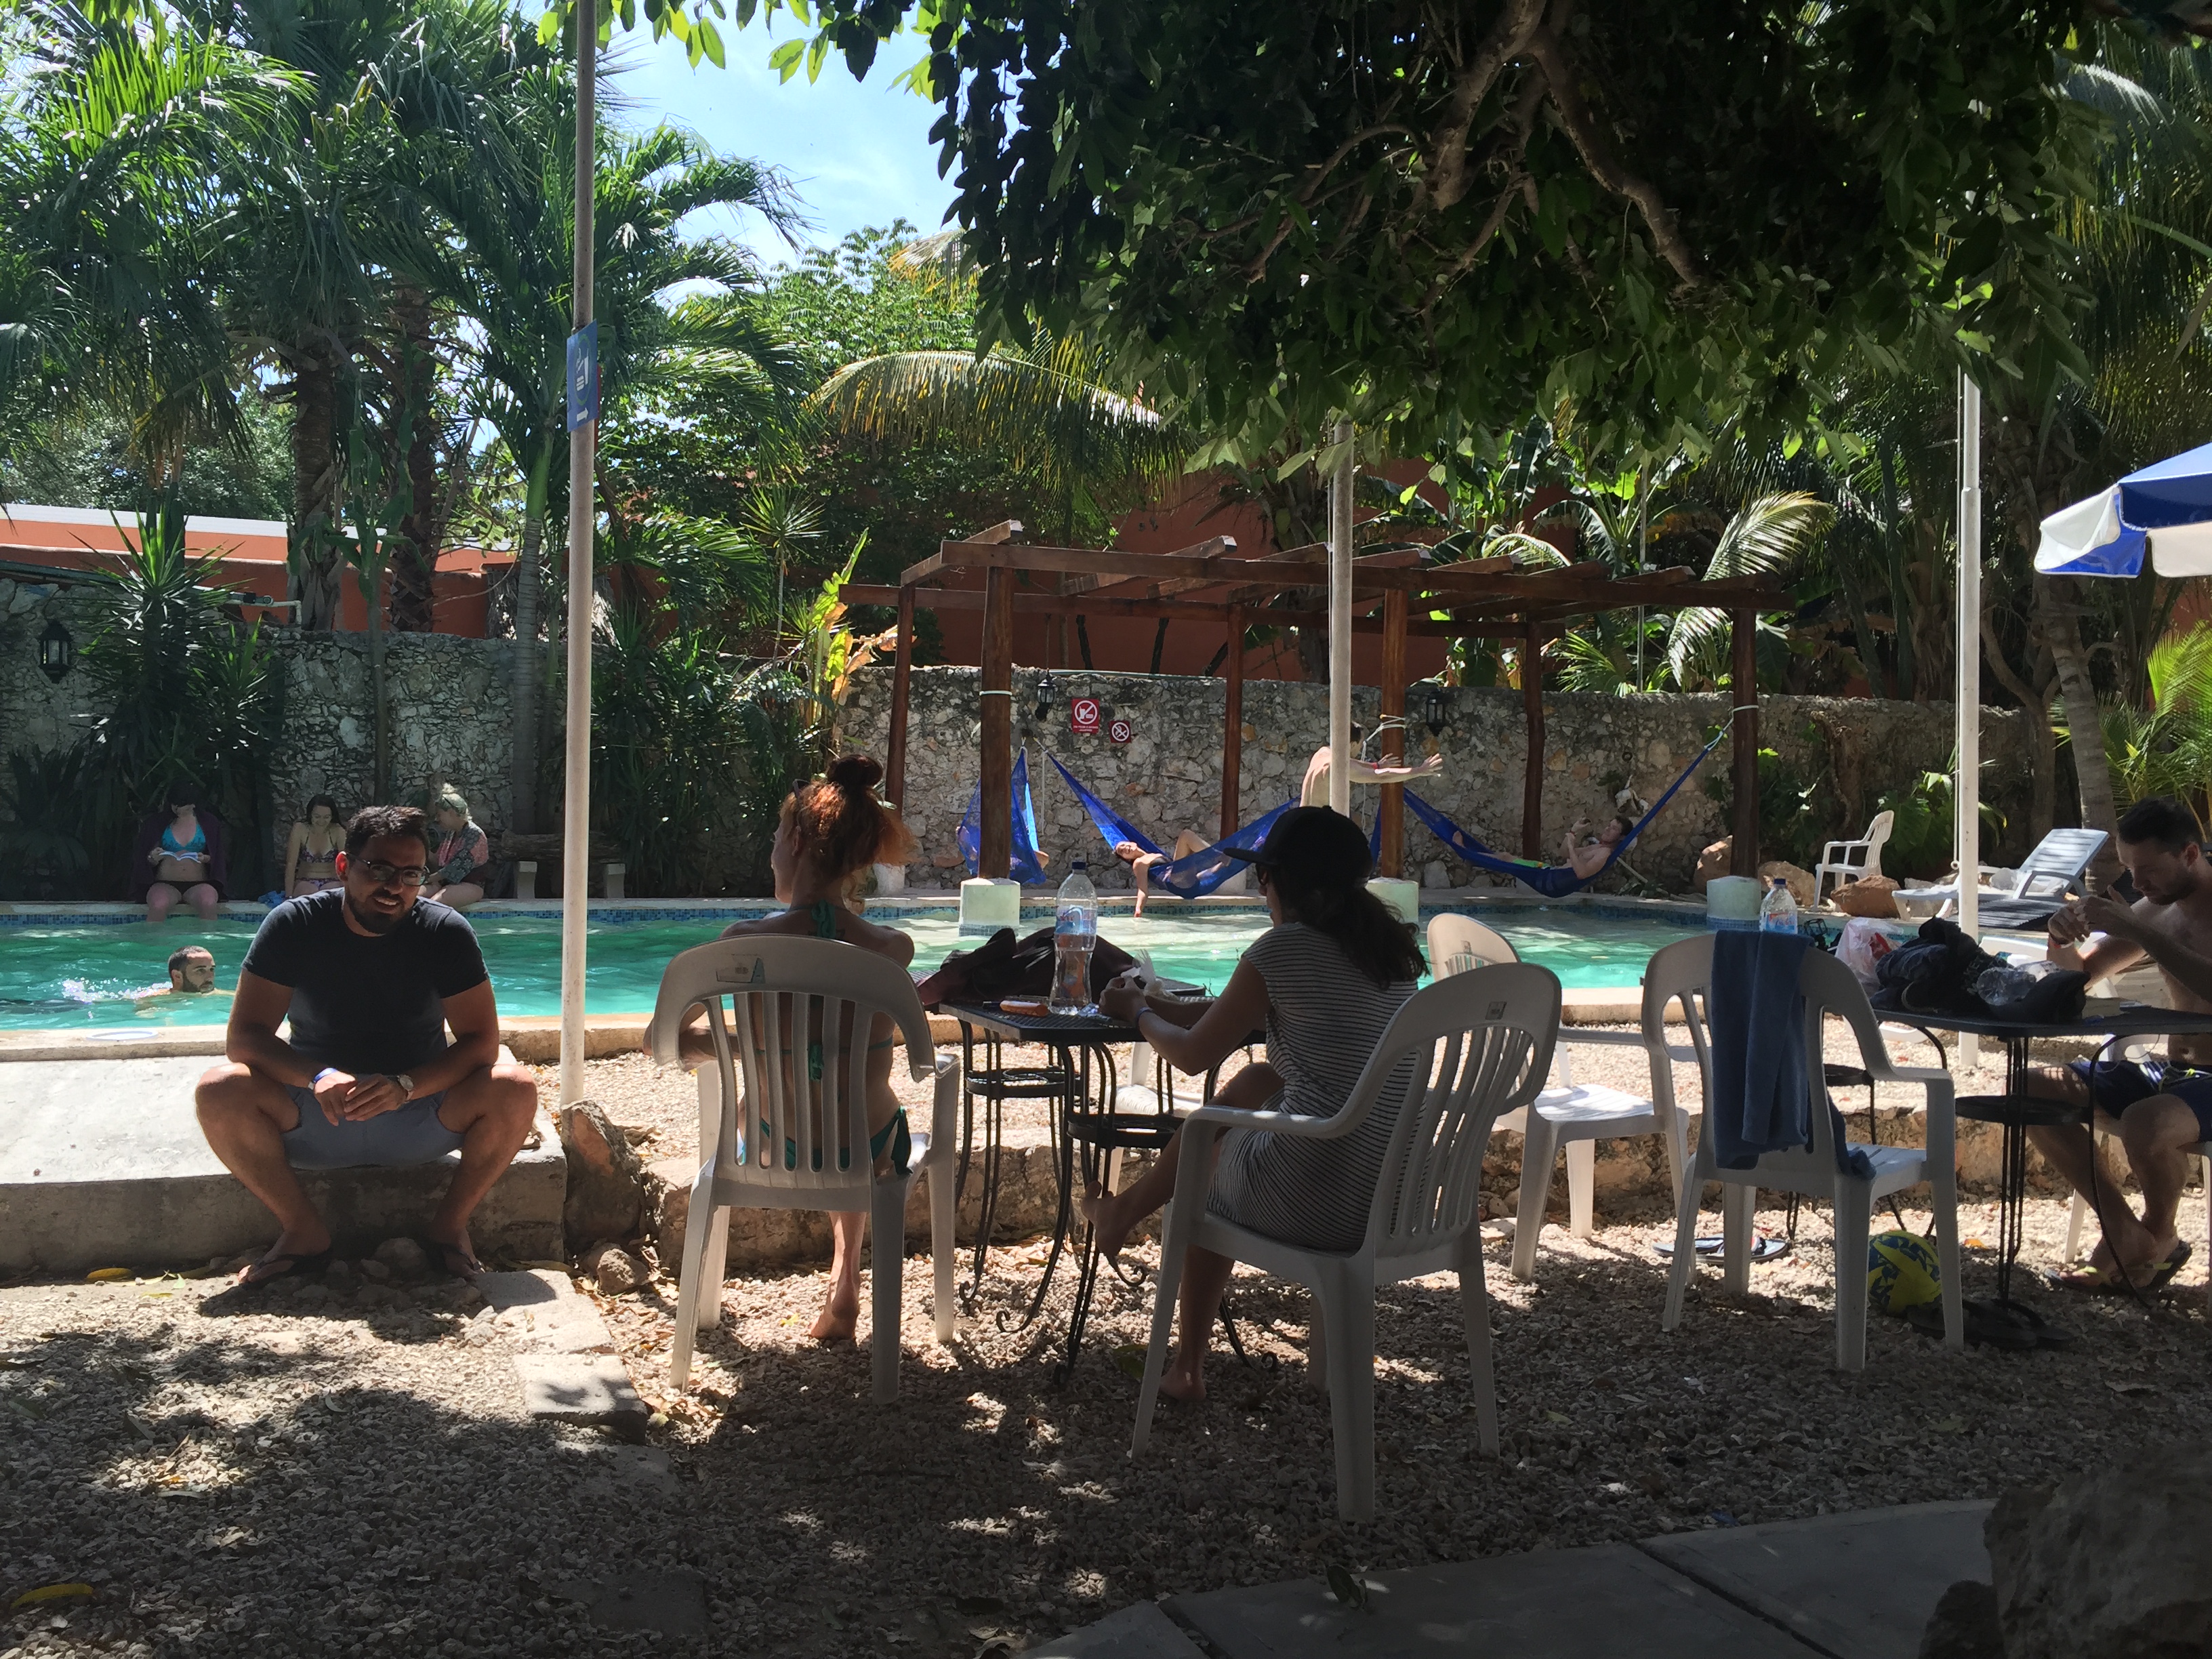 Day 2 – Merida, Mexico (Sleep & Underground Club)